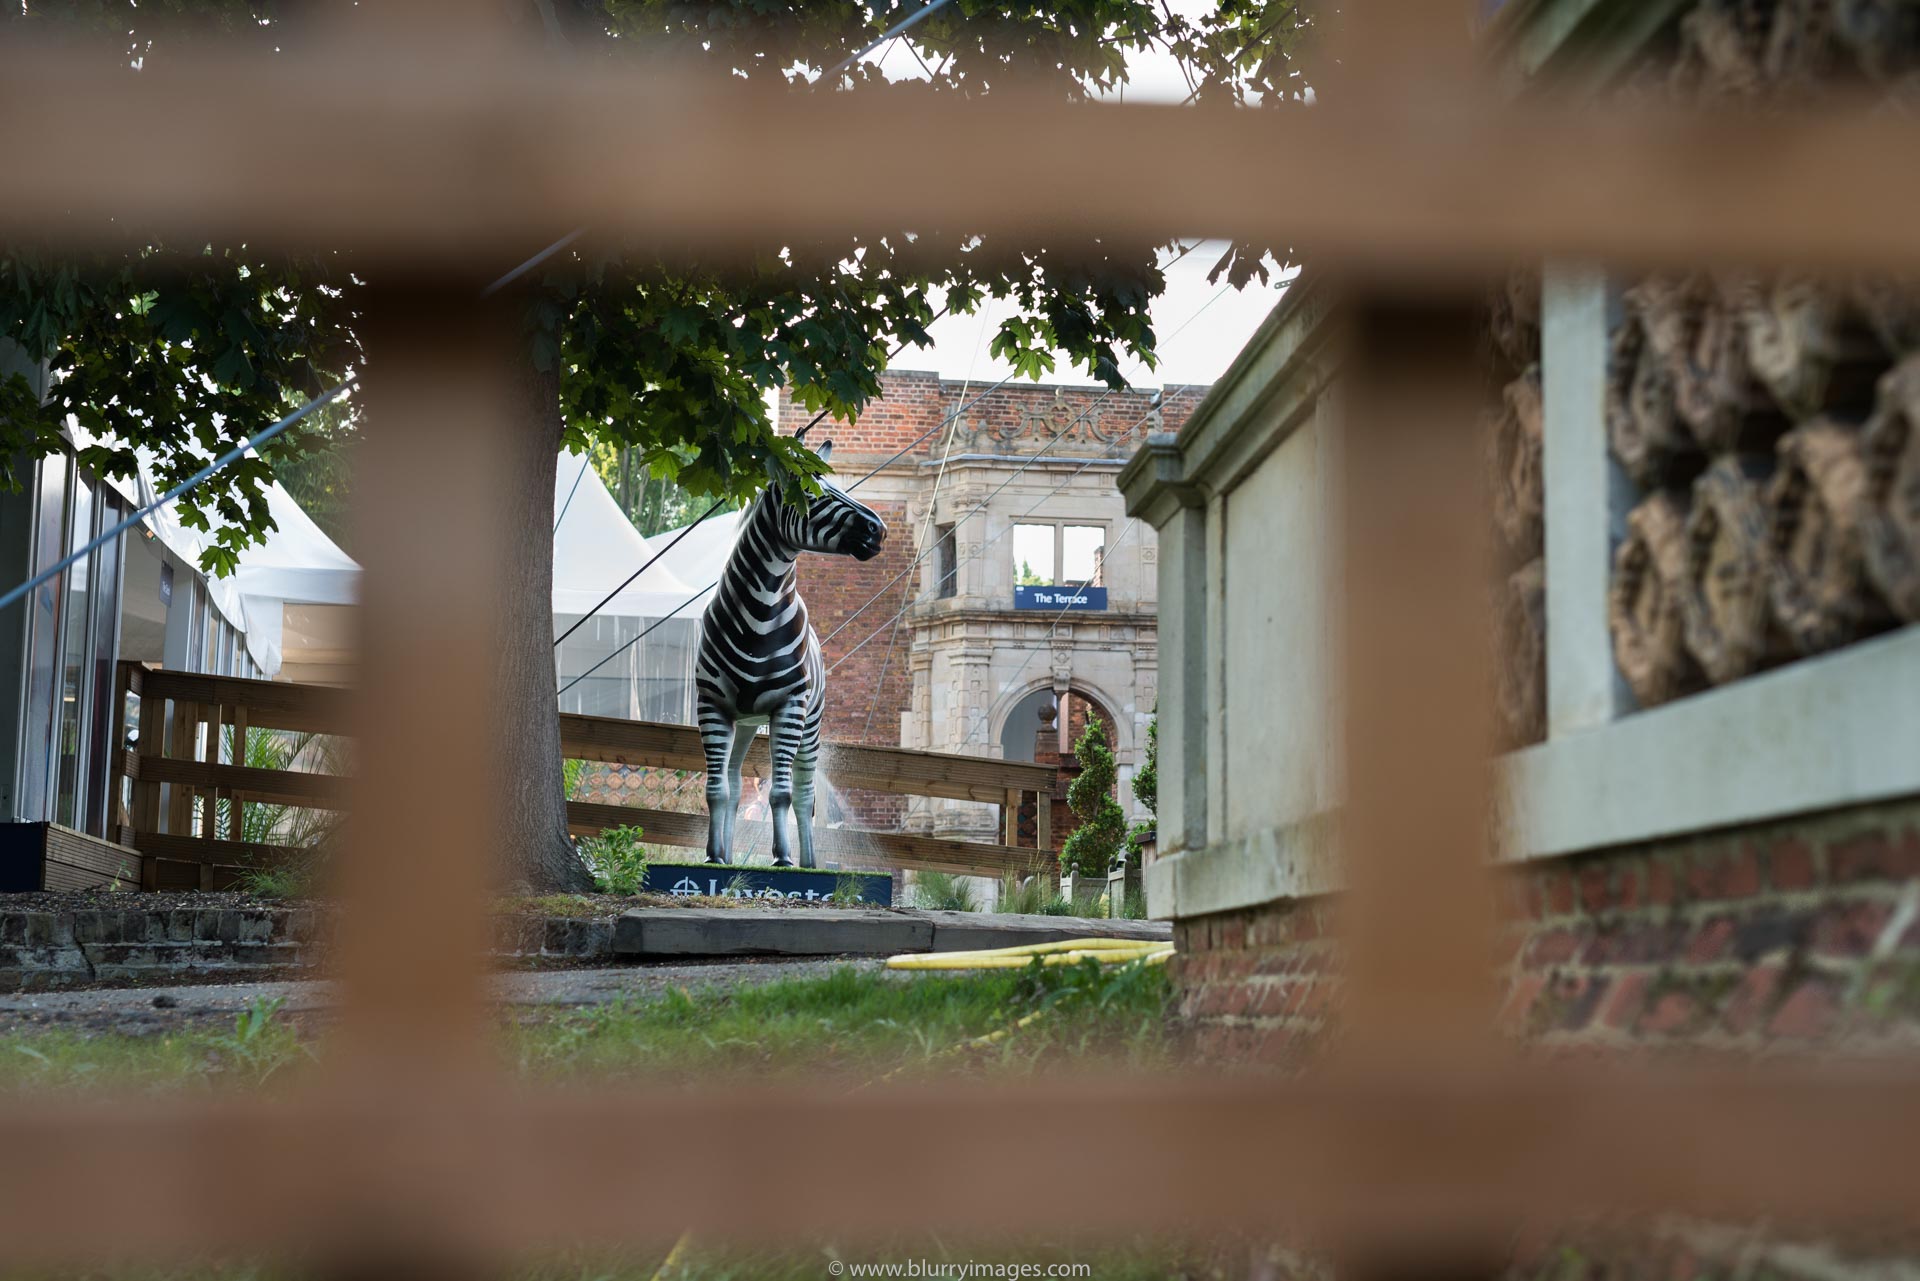 Artificial zebra, 2016, Holland Park, outdoors, brown fence,